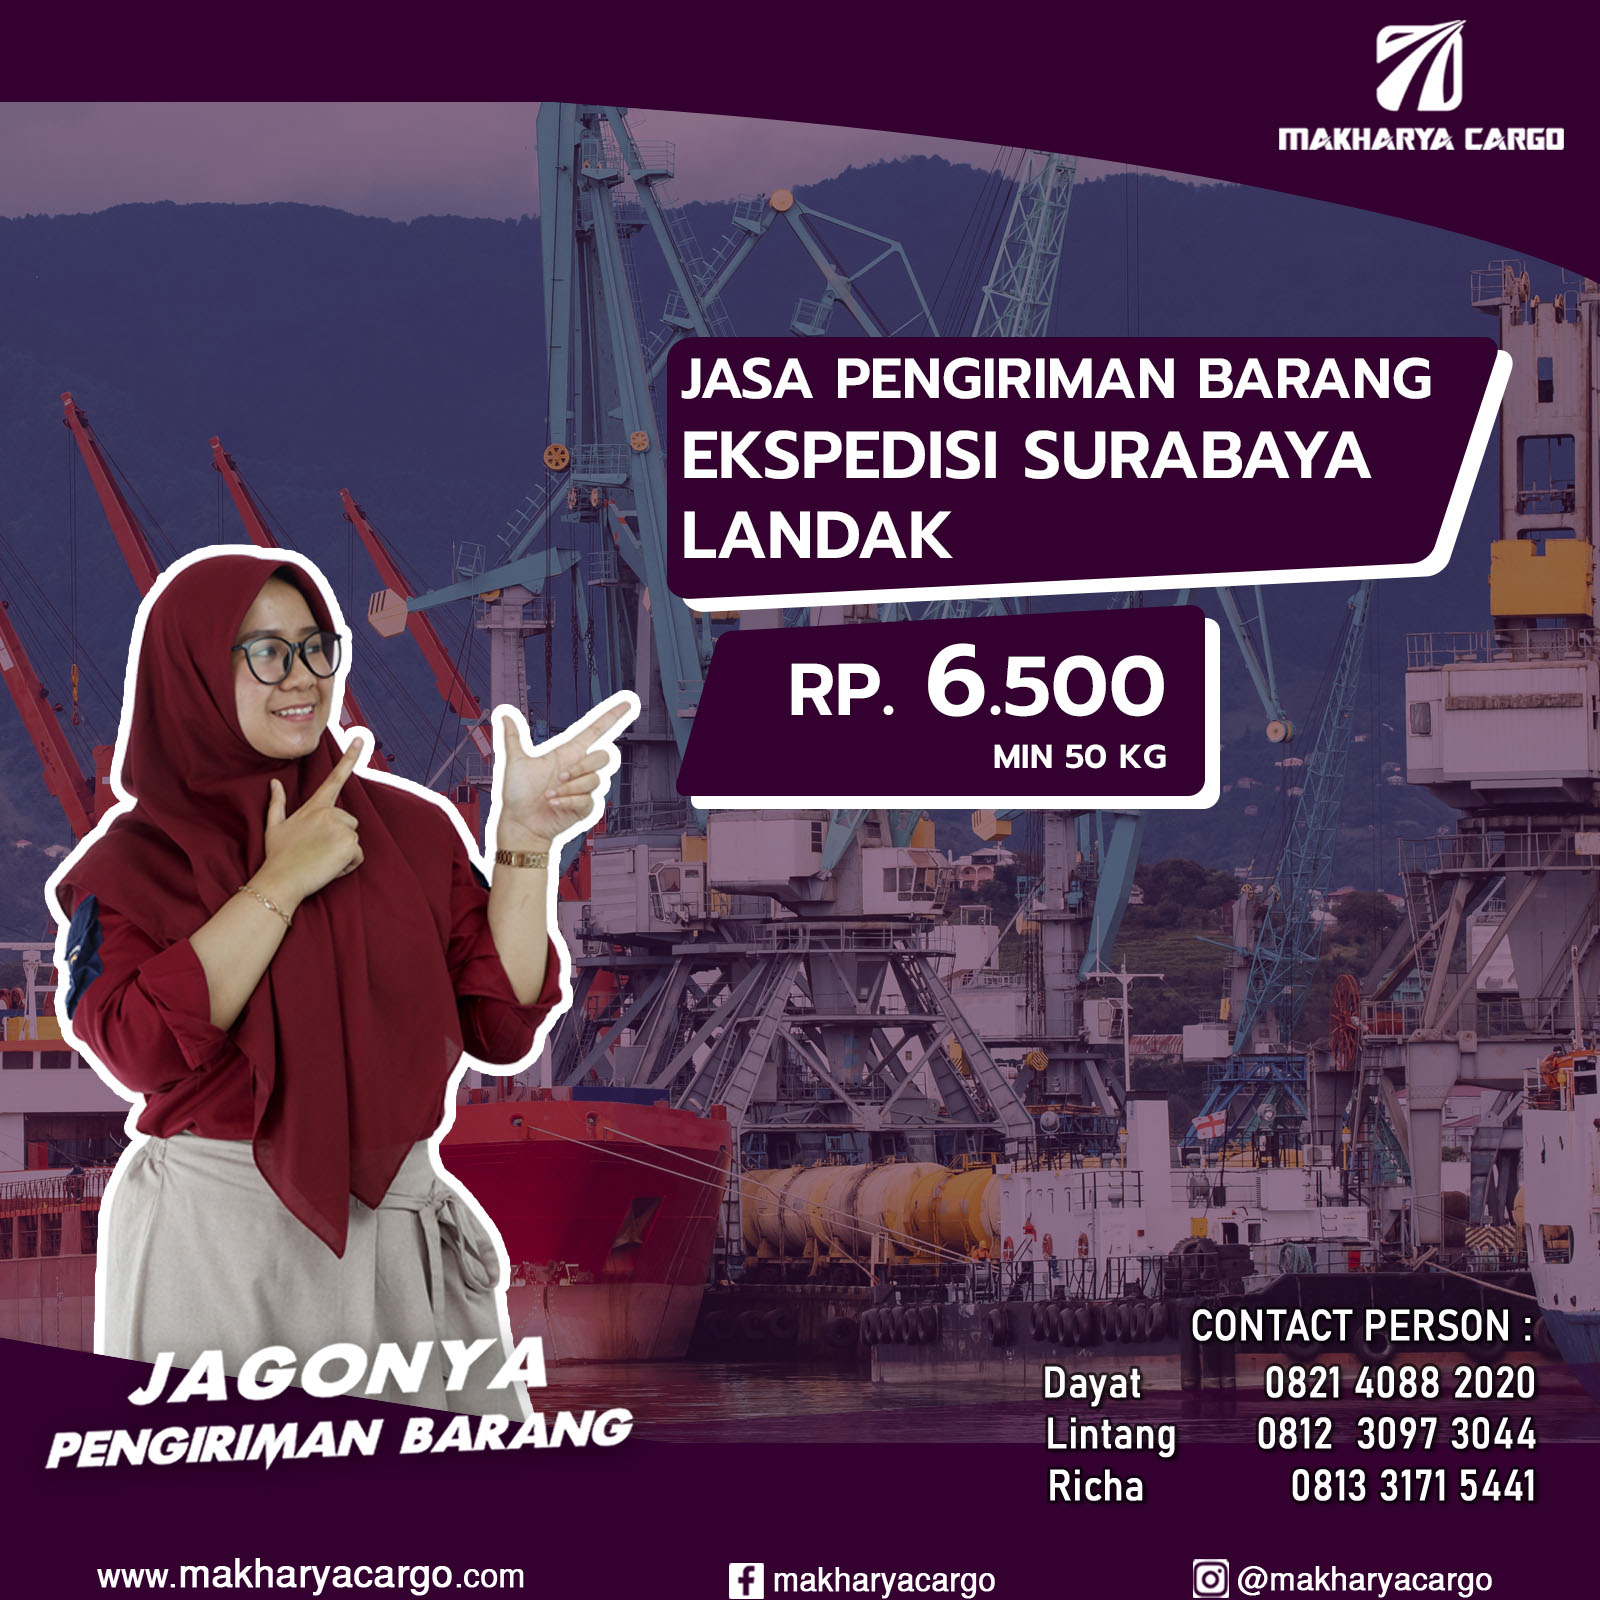 Ekspedisi Surabaya Landak